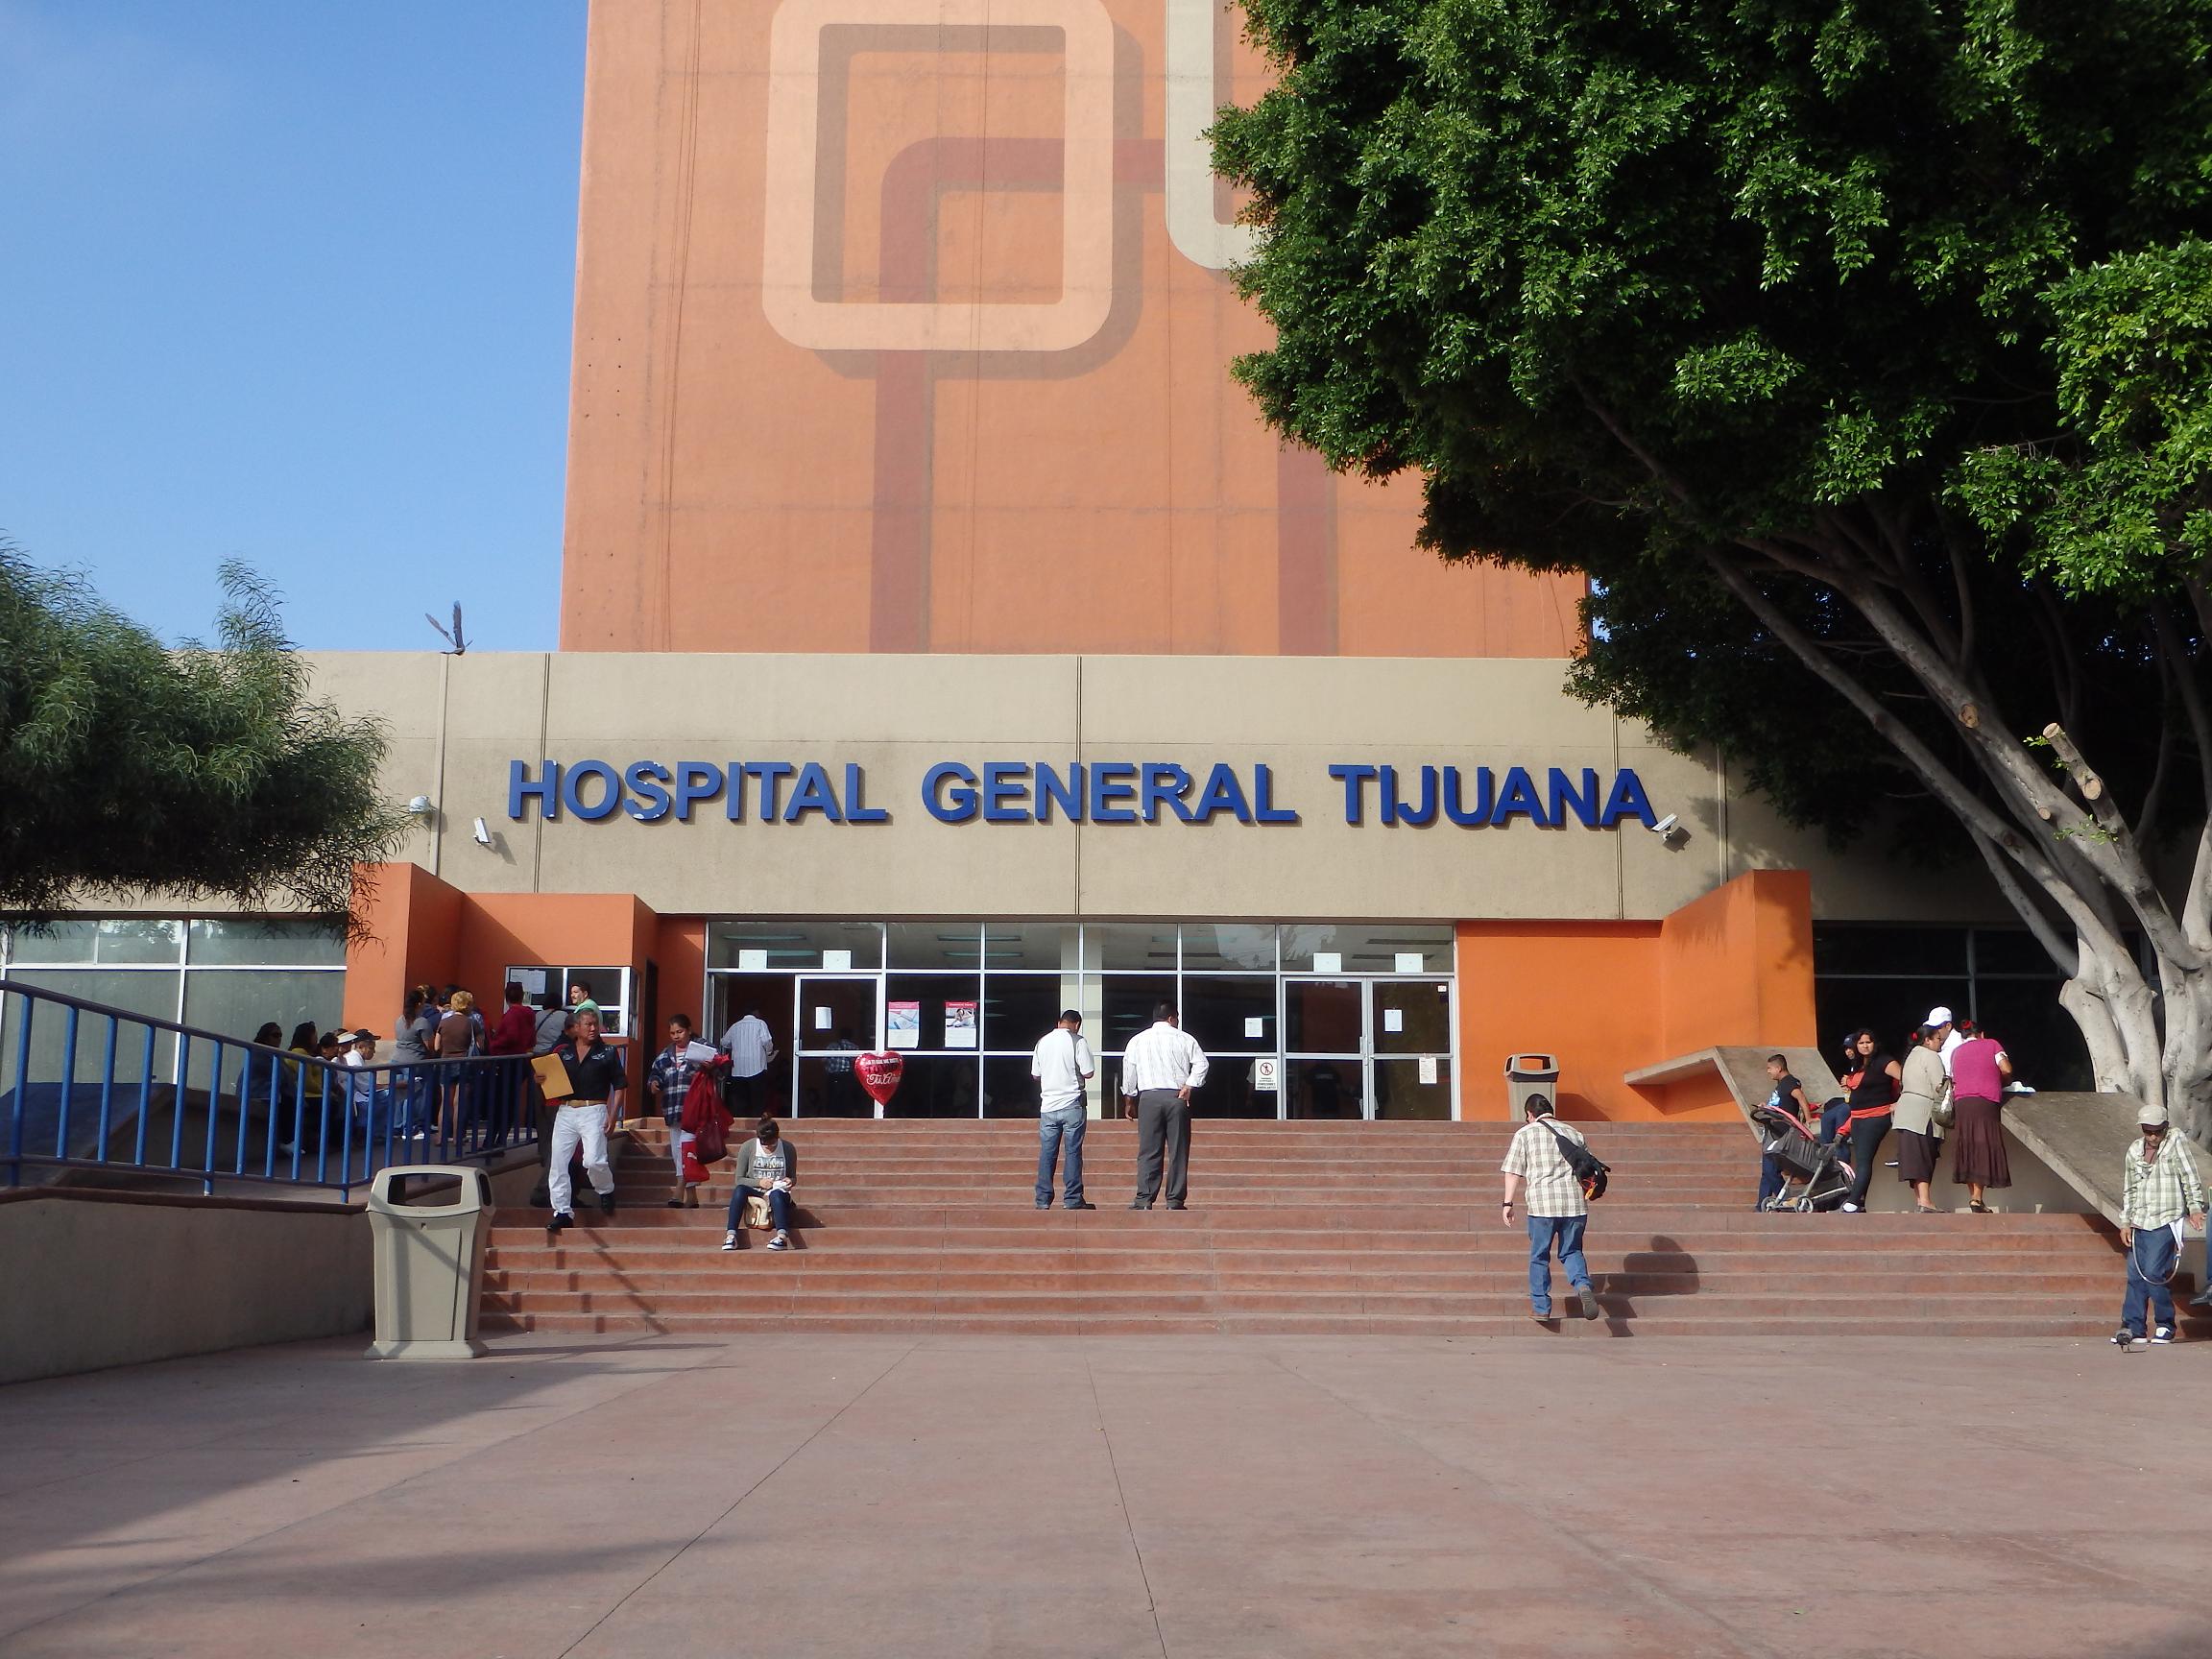 Resultado de imagen para hospital general tijuana